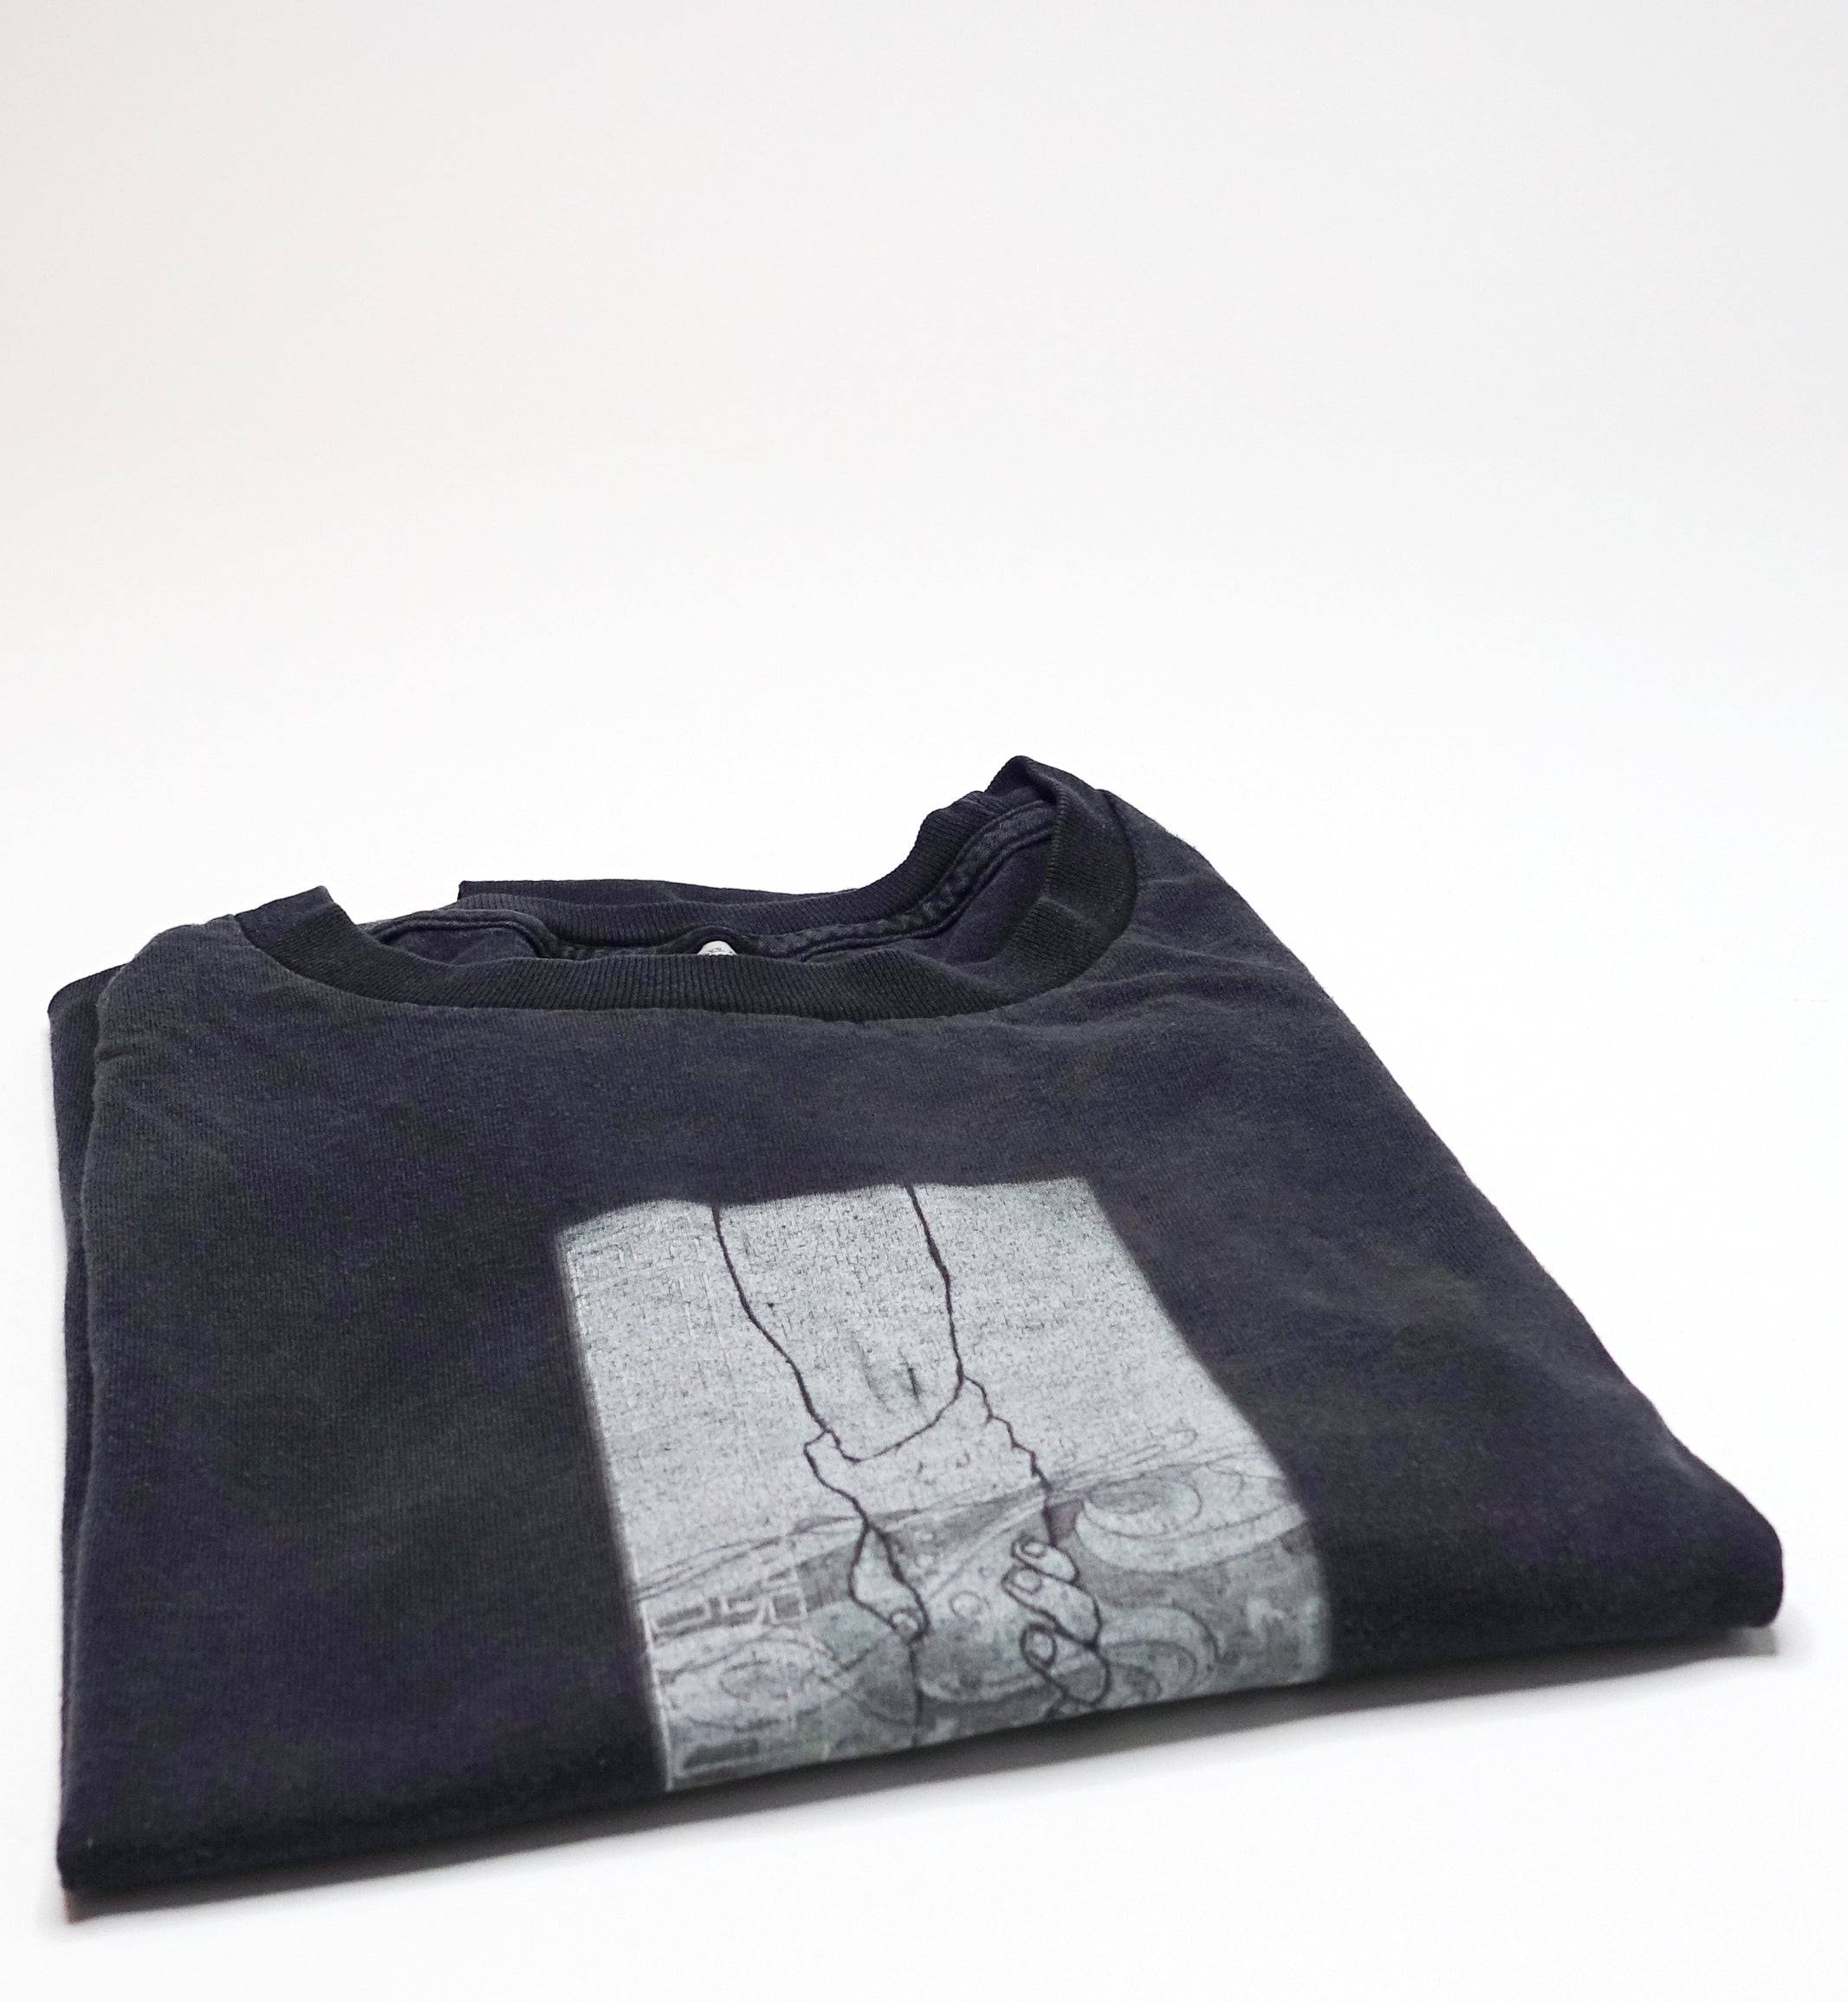 the Mars Volta – Hand Holding Tour Shirt Size Large